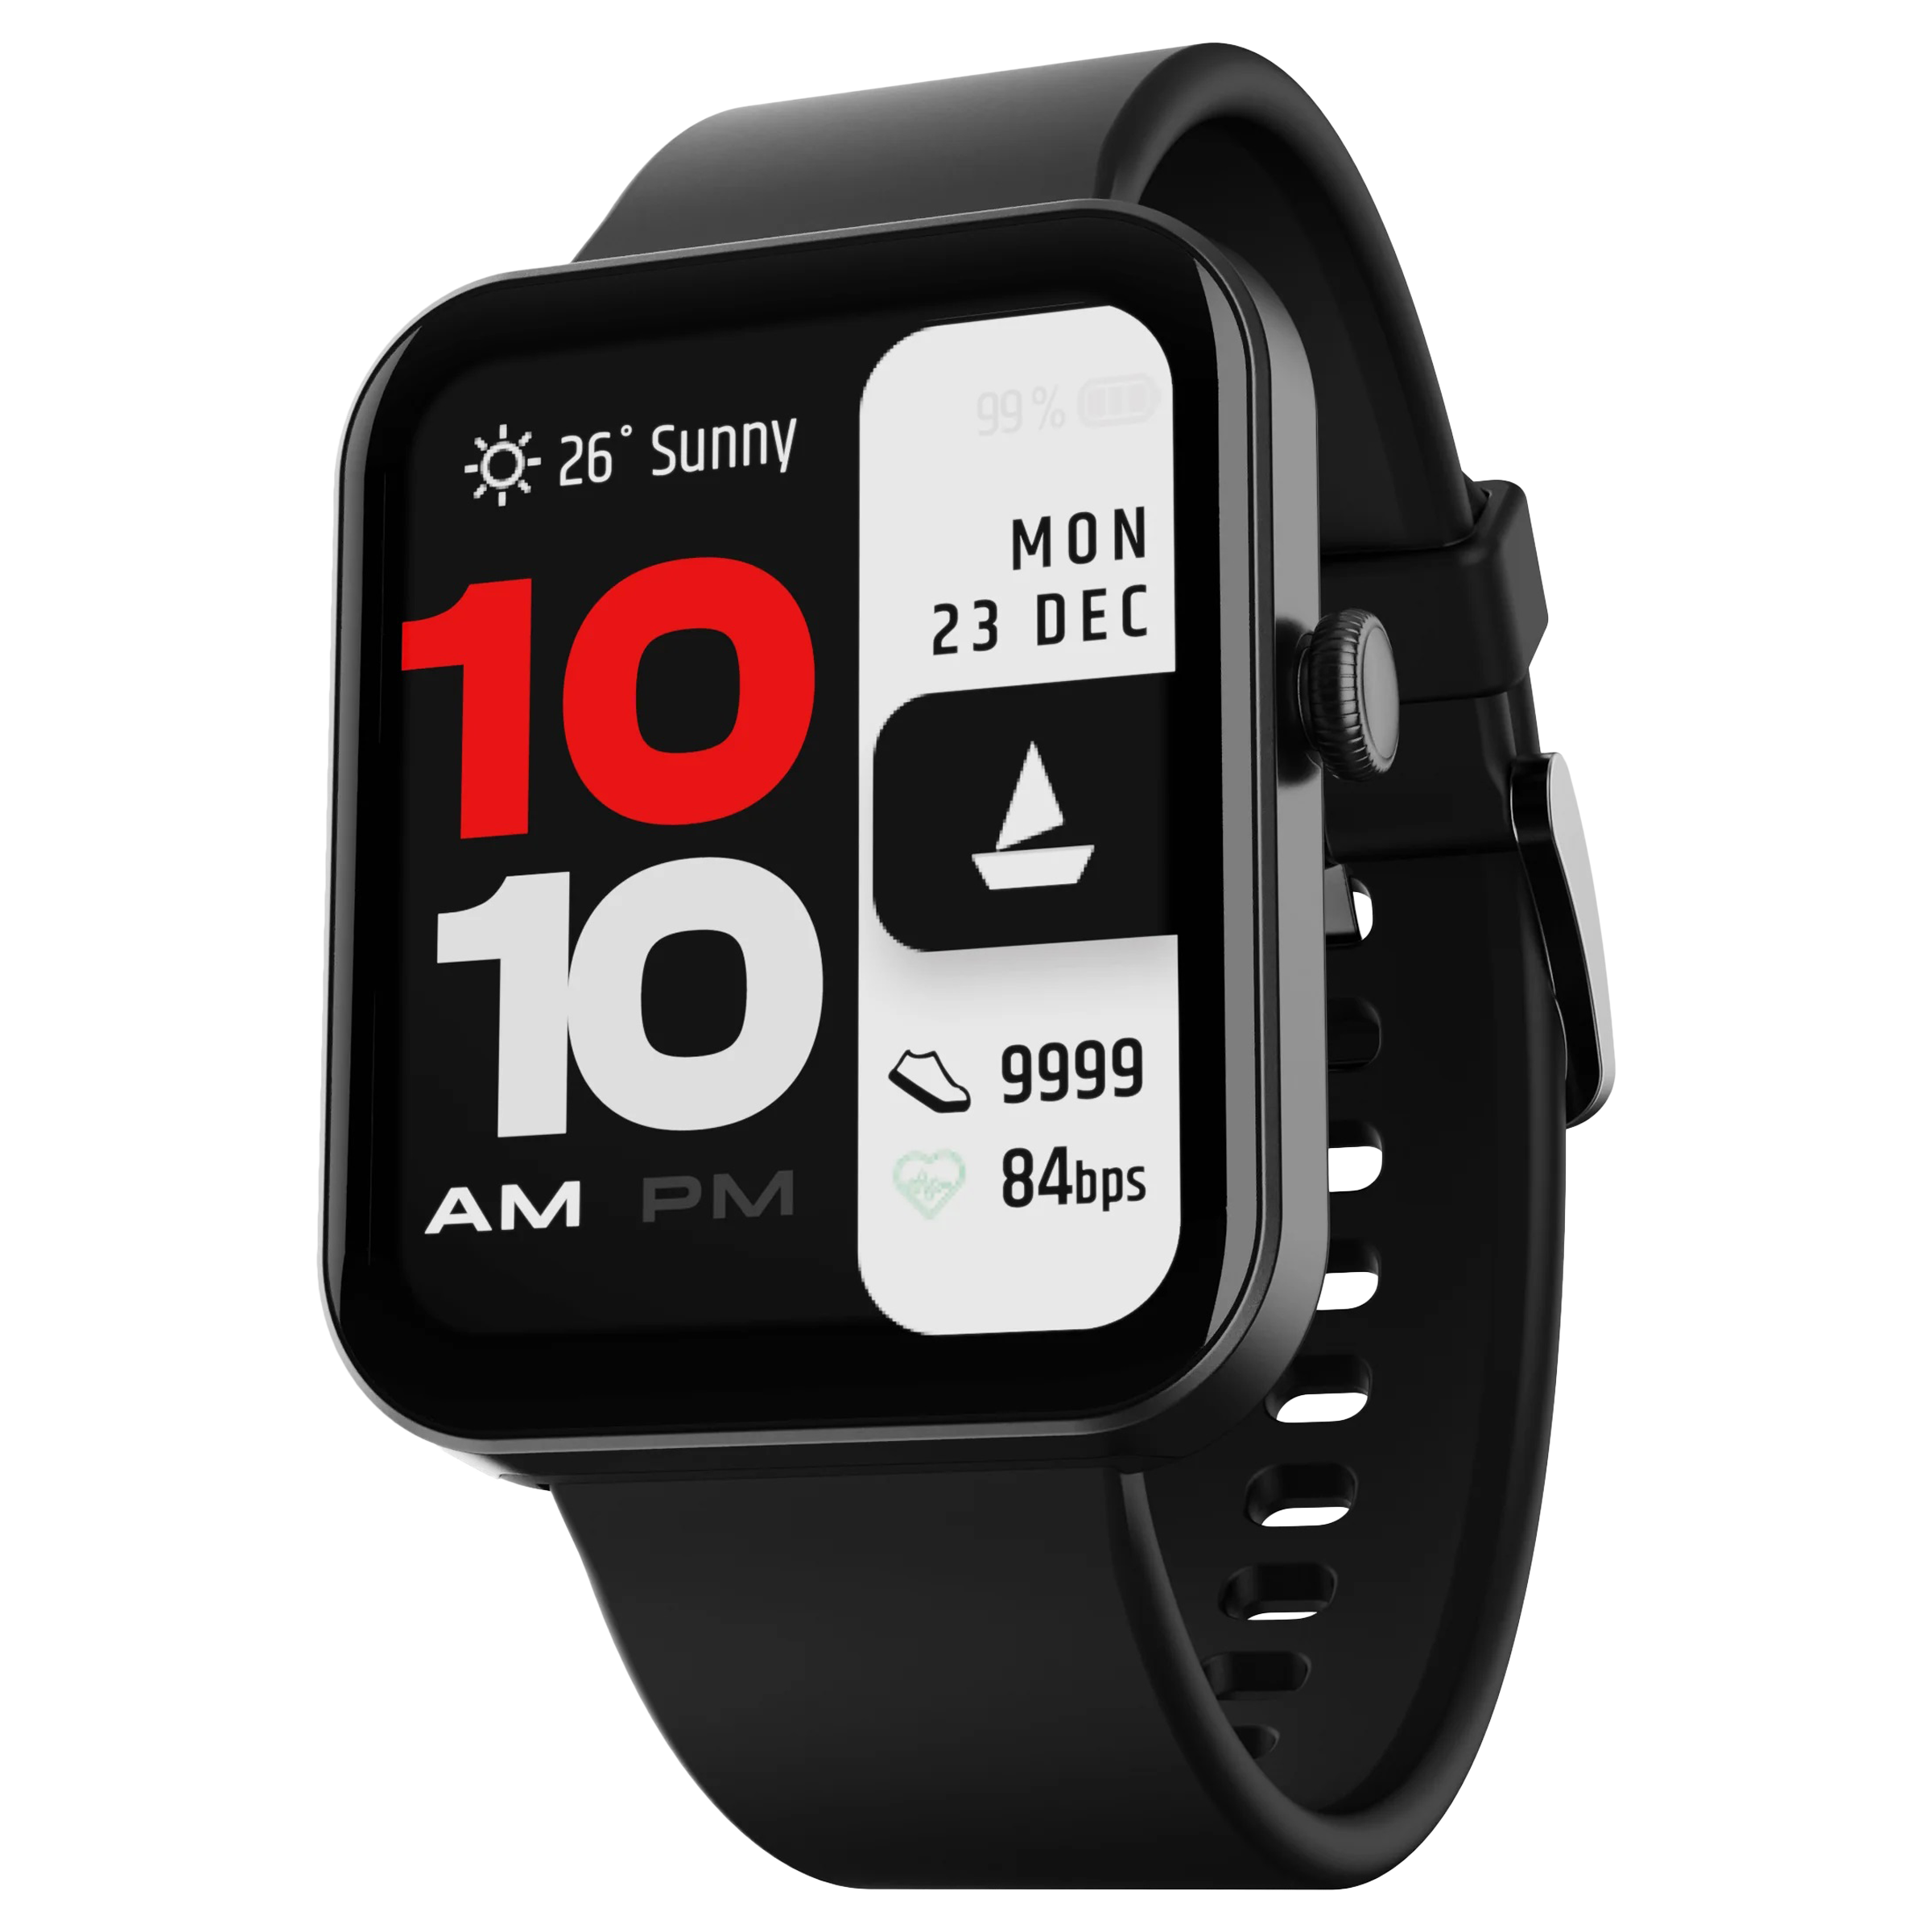 Amazon.com: Woneligo Smart Watch for Men Women with Bluetooth Call,1.8